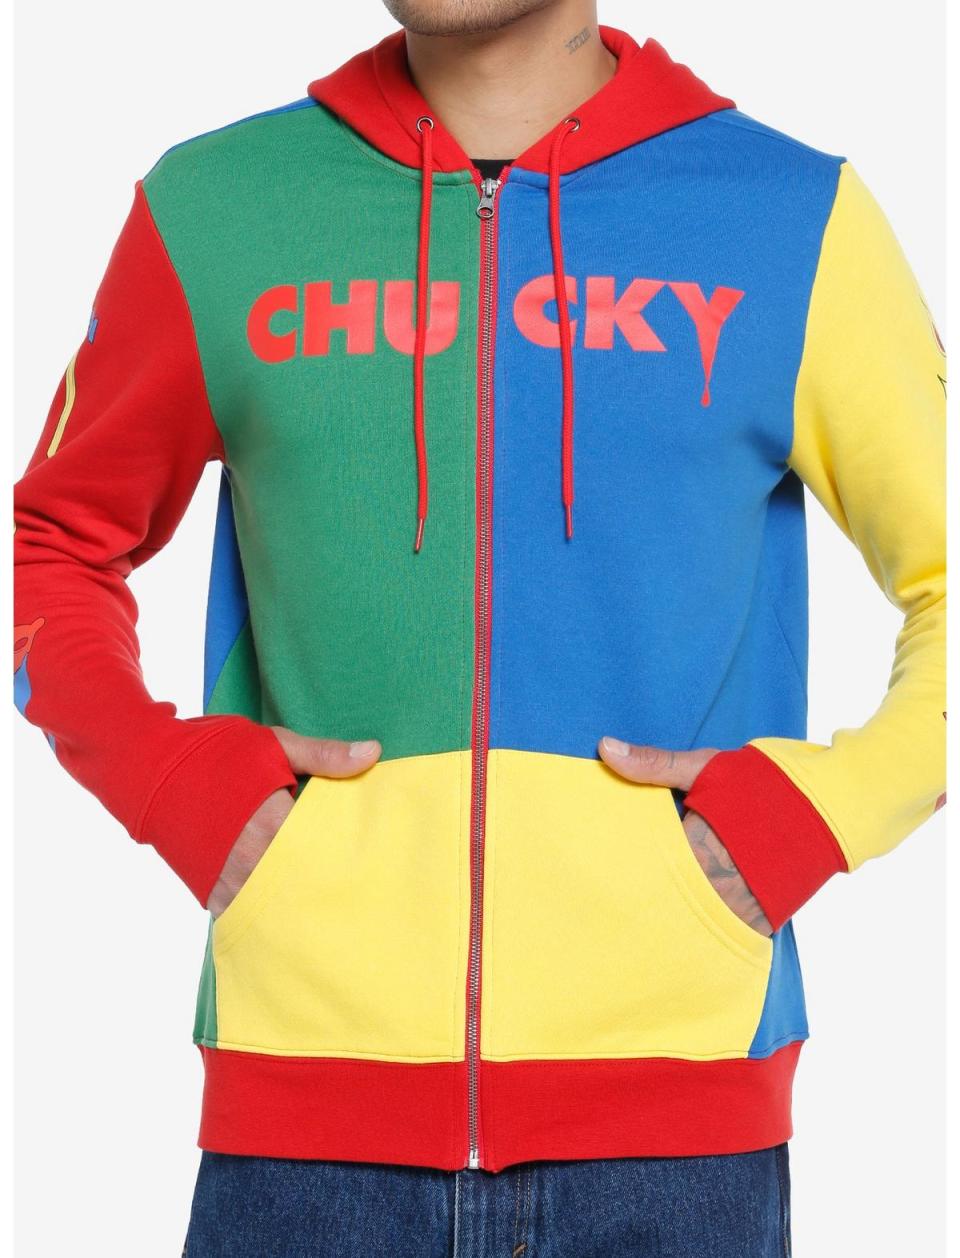 Chucky x Hot Topic hoodie